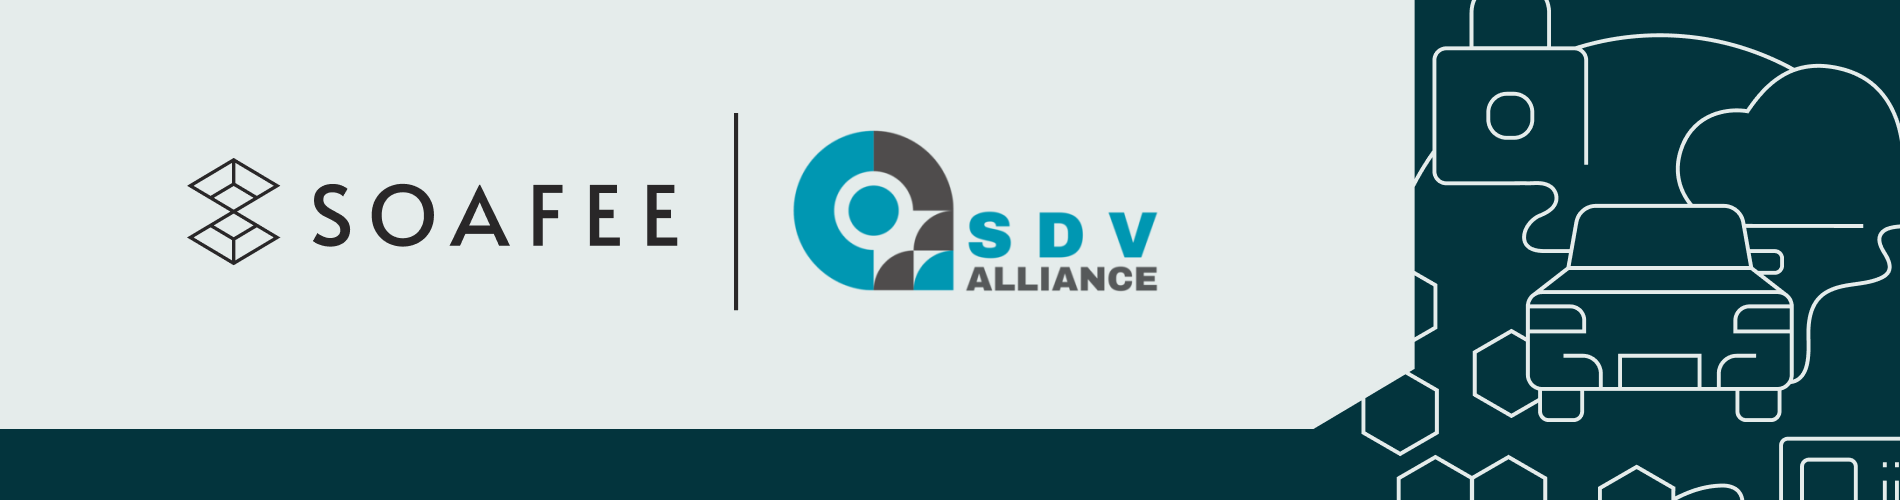 New Collaboration Announcement - SDV Alliance hero background